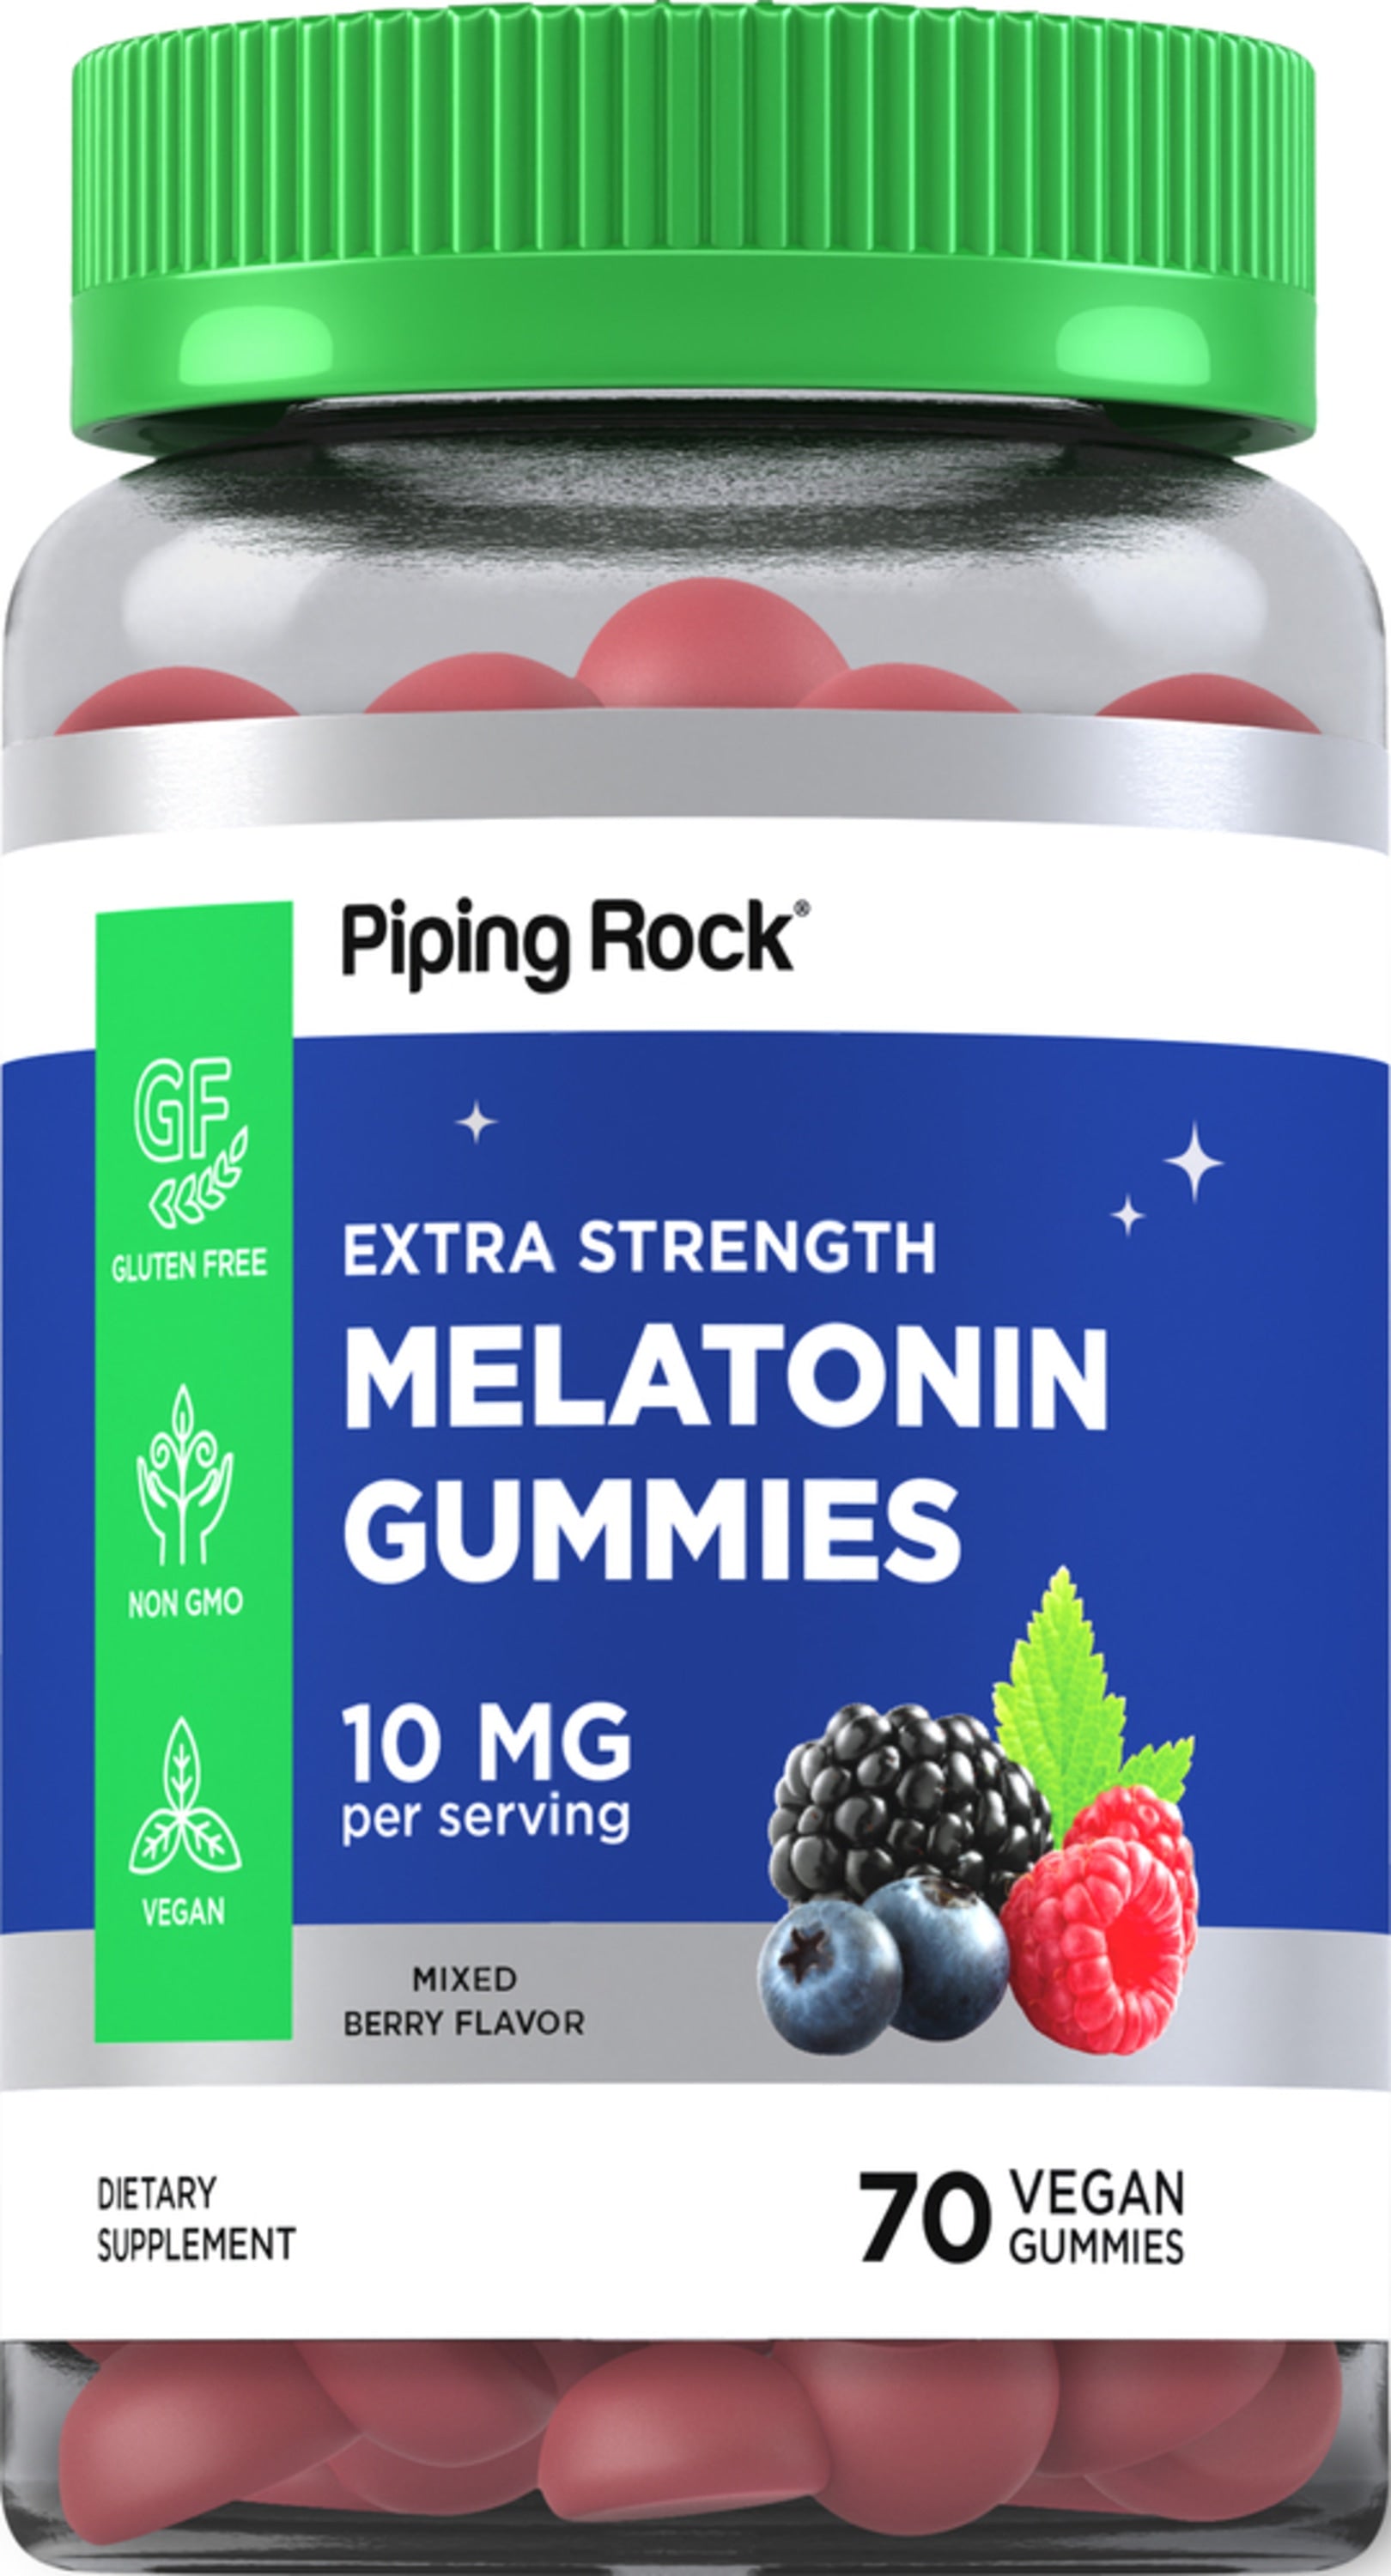 Melatonin Gummies (Mixed Berry), 10 mg (per serving), 70 Vegan Gummies